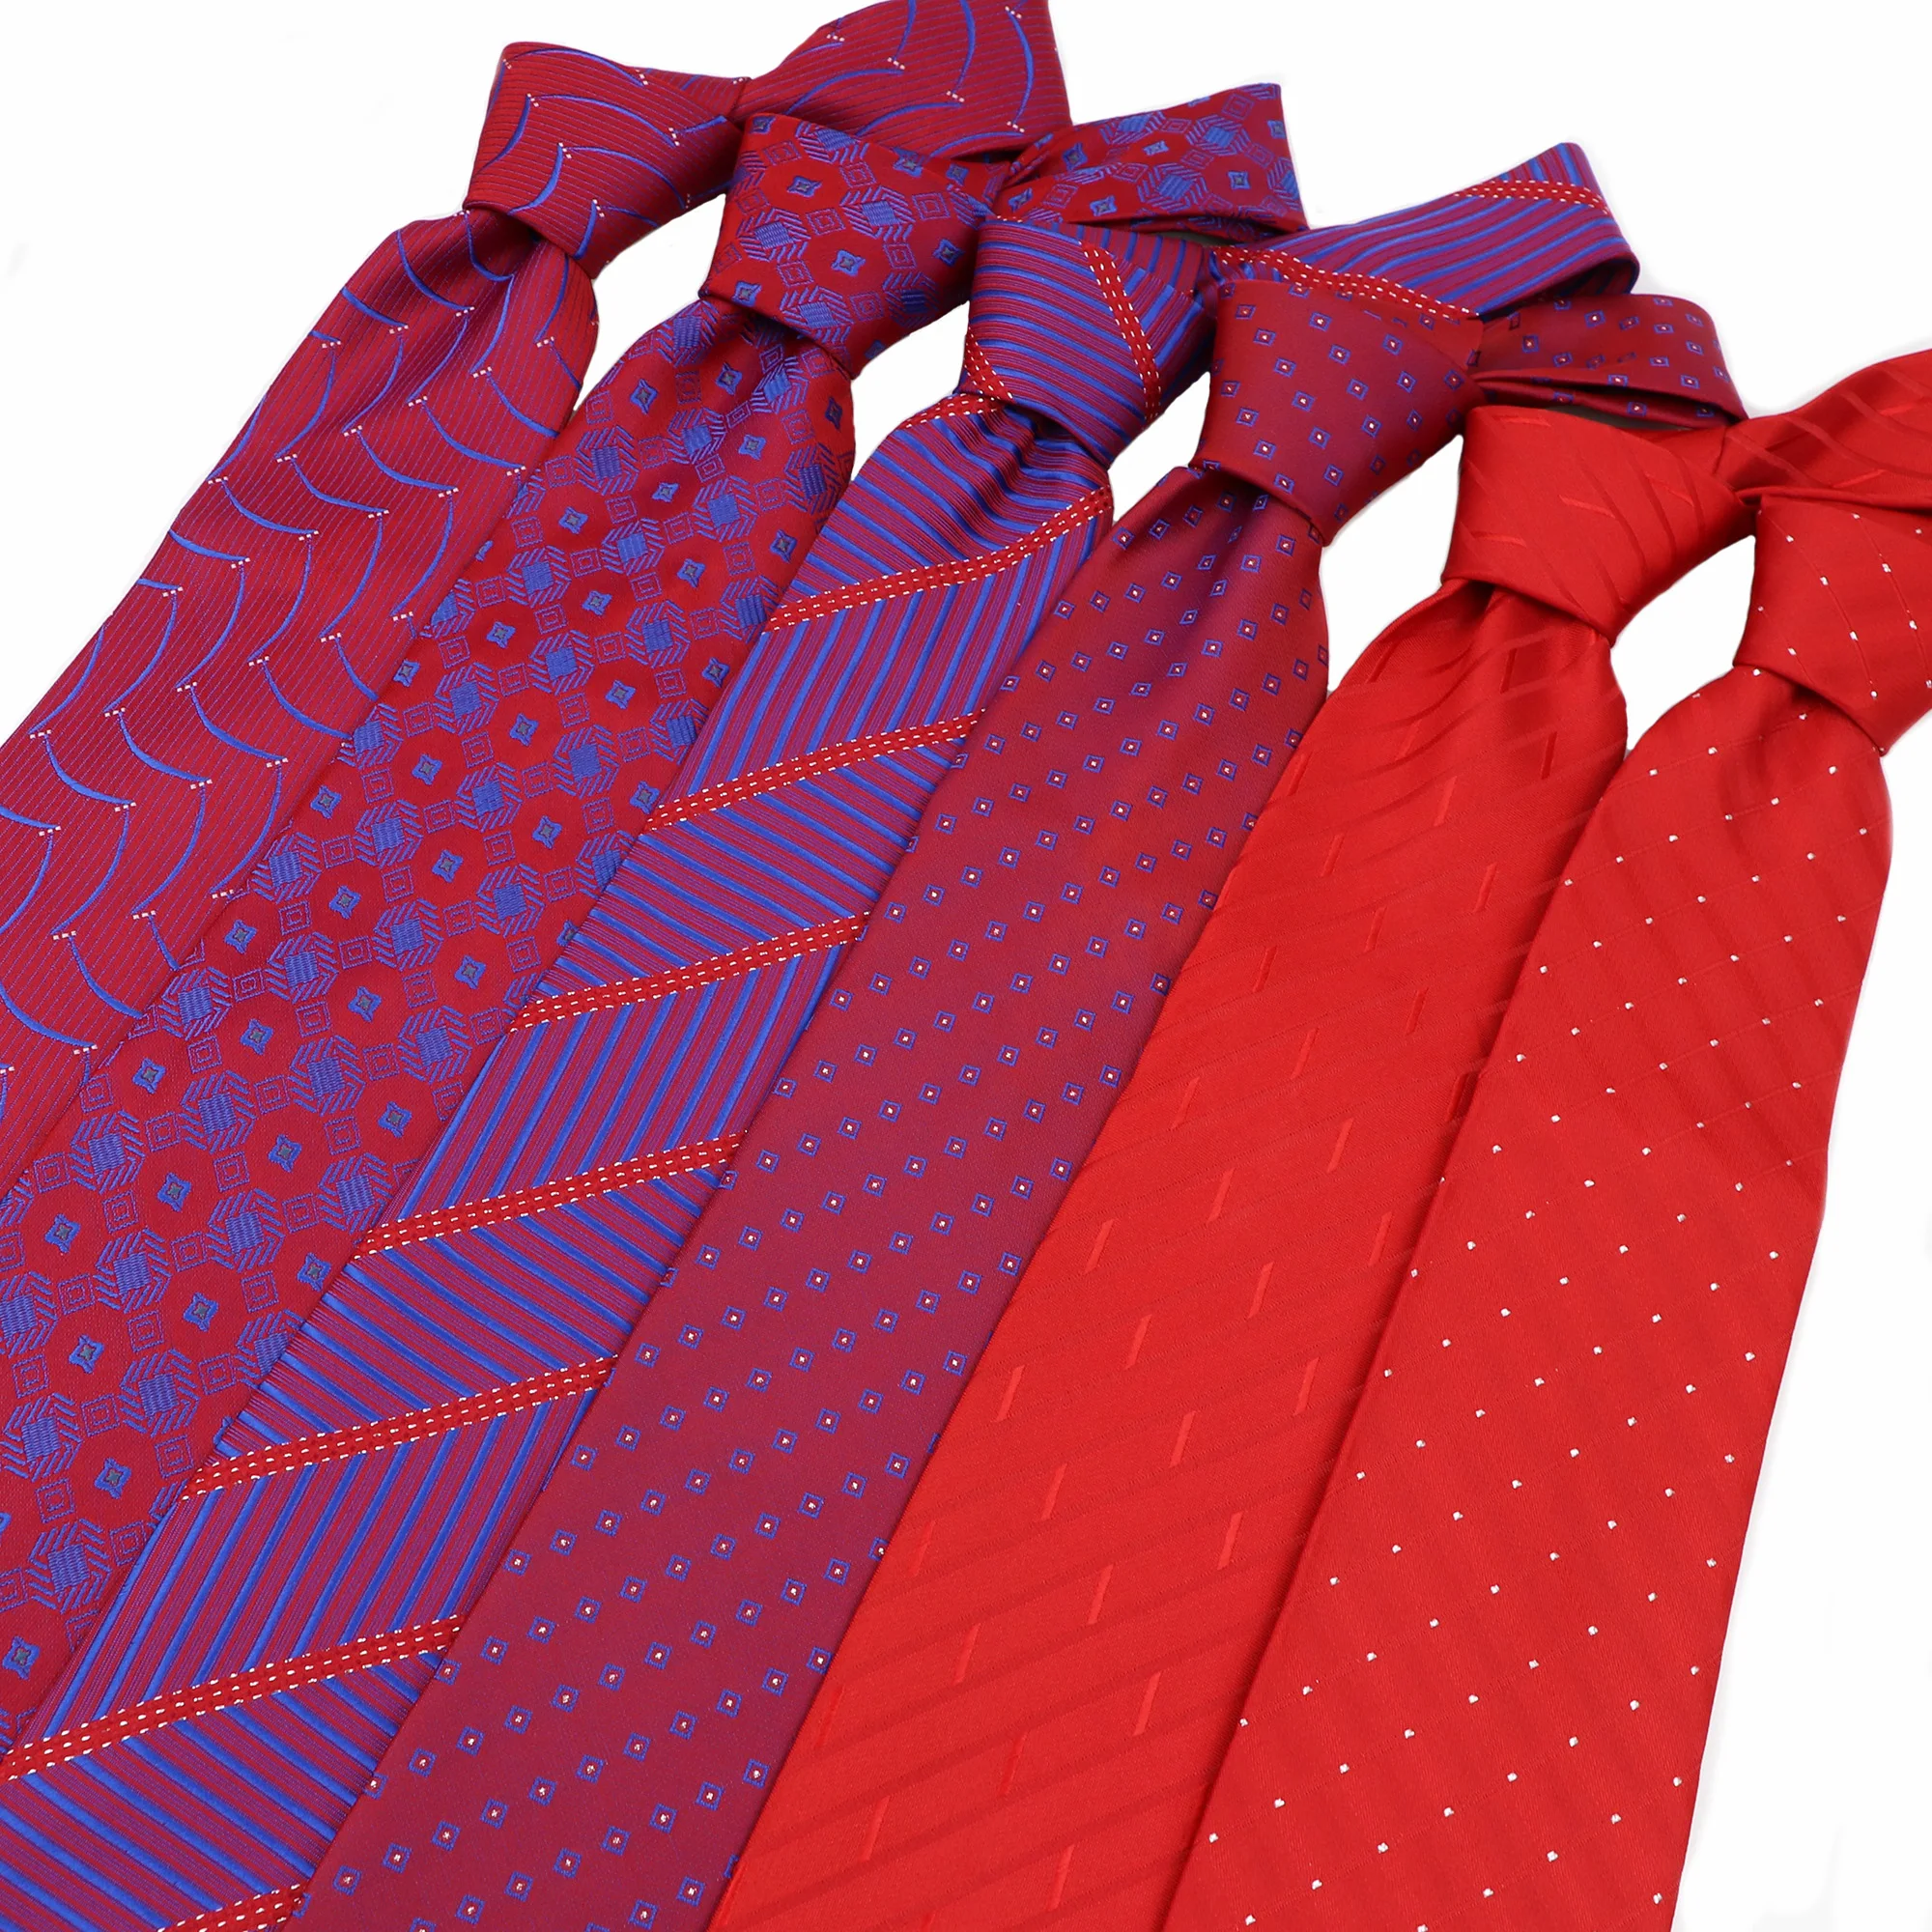 Classic Striped Black Red JACQUARD WOVEN 100% Silk Men's Tie Necktie Hot